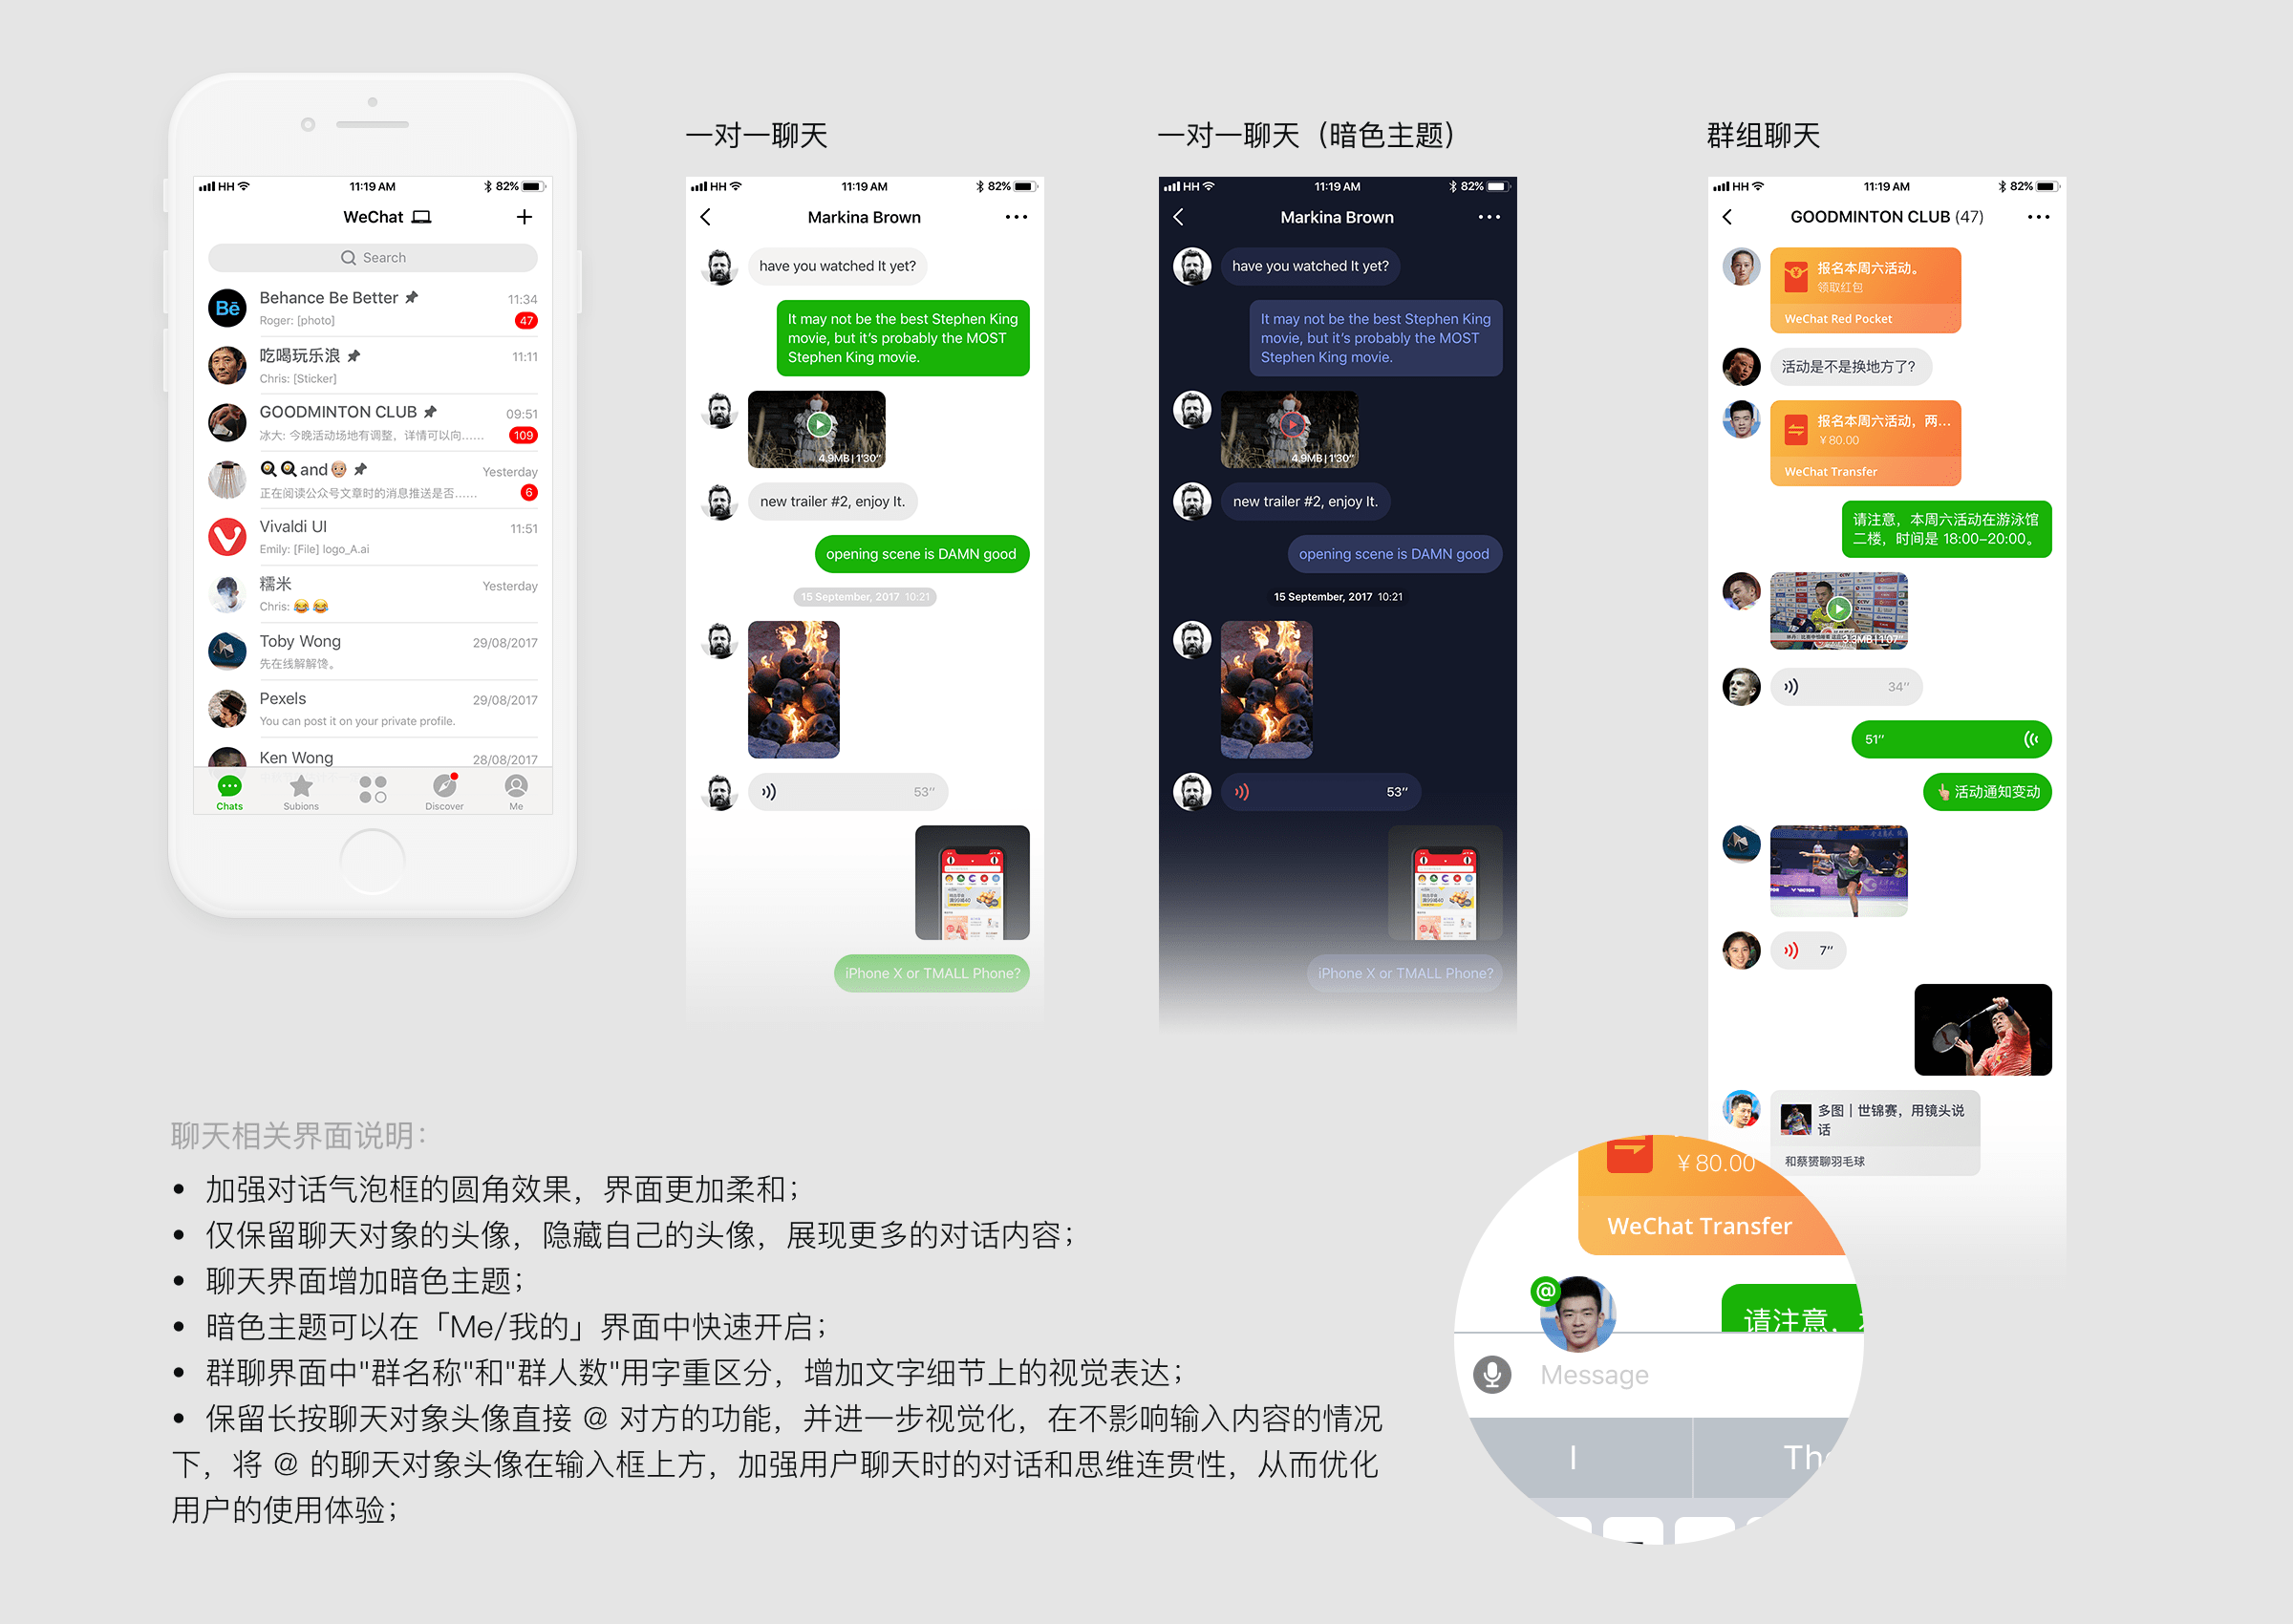 WeChat-Refresh-Part-3-min.png